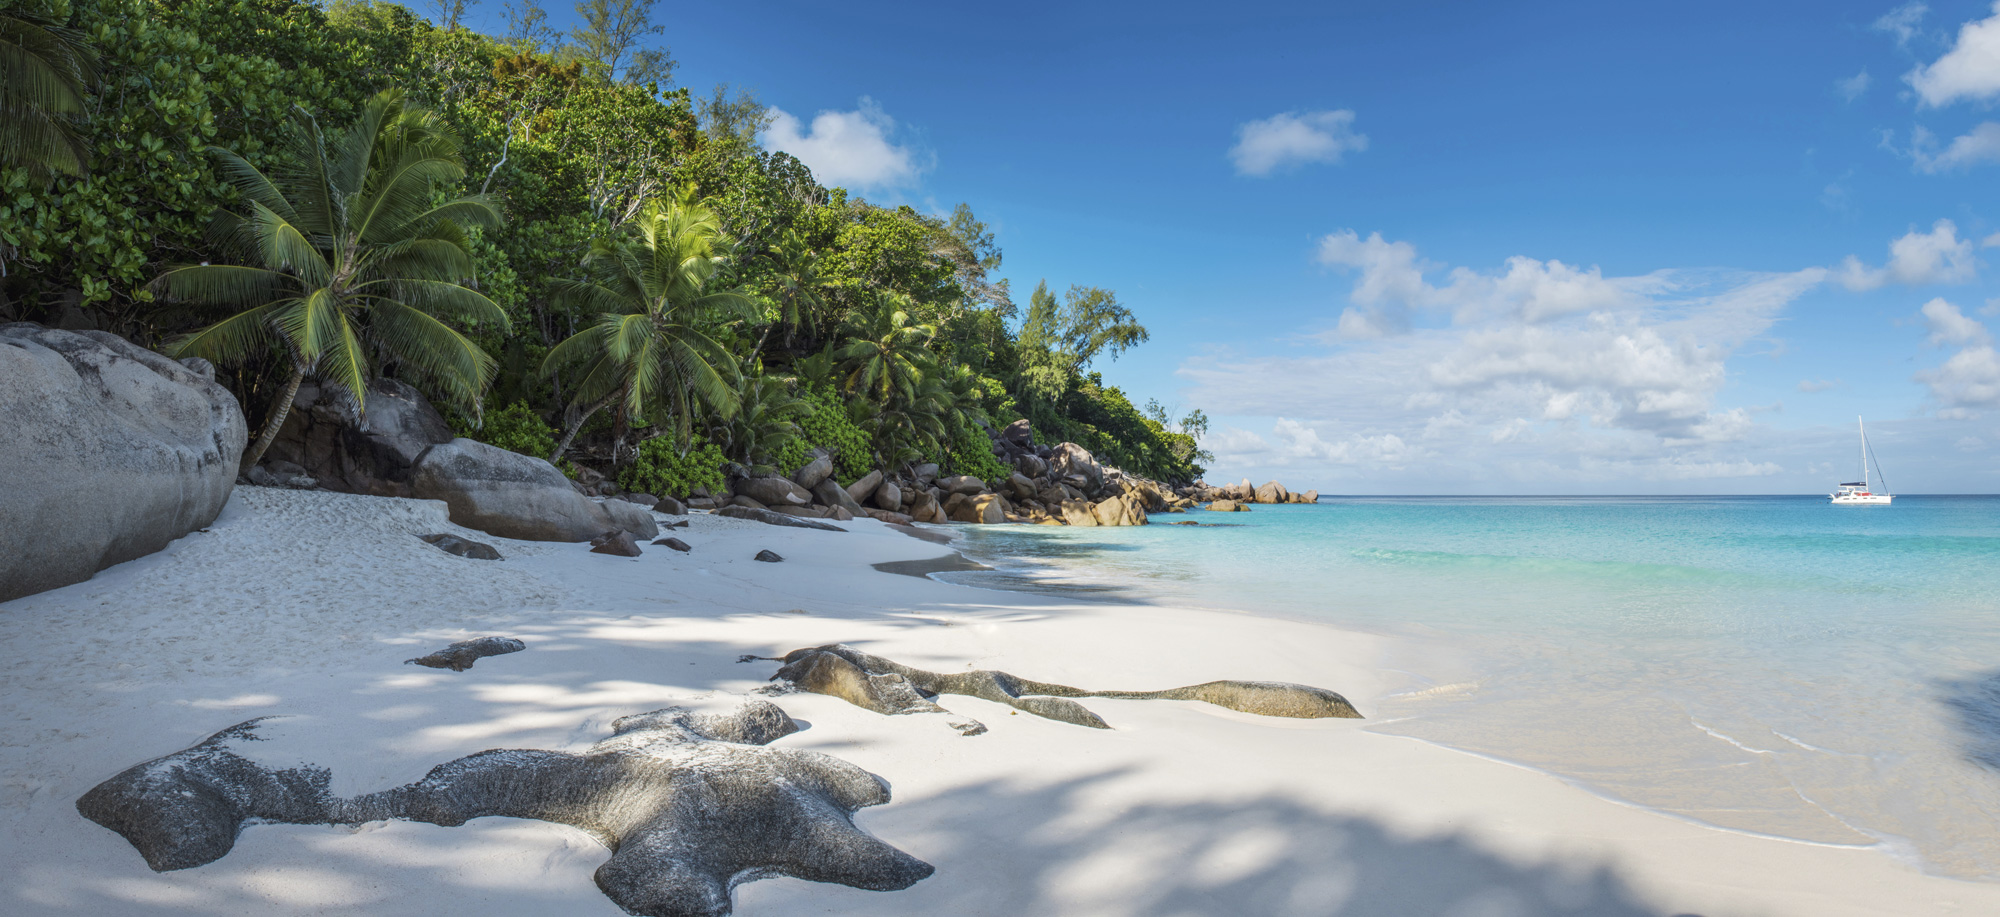 The Seychelles Islands - White sand beaches